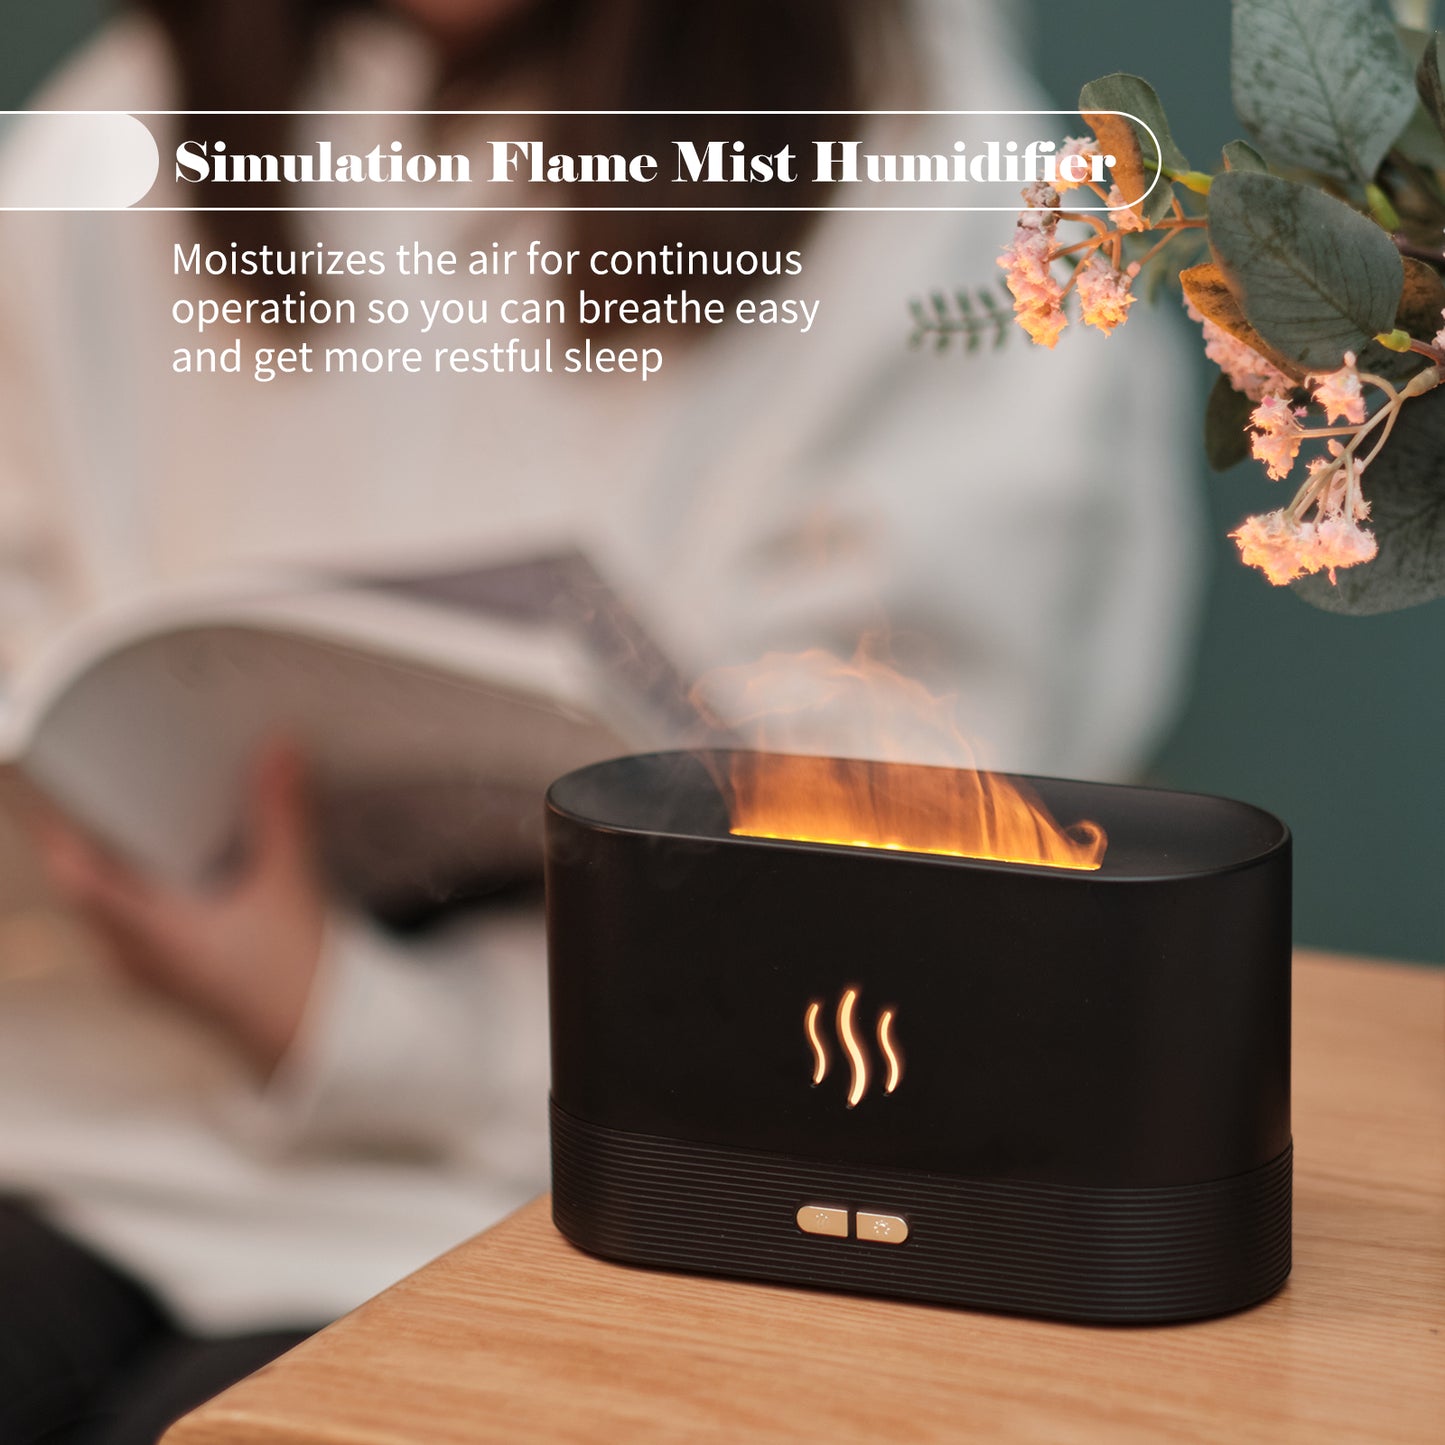 The Flaming Humidifier